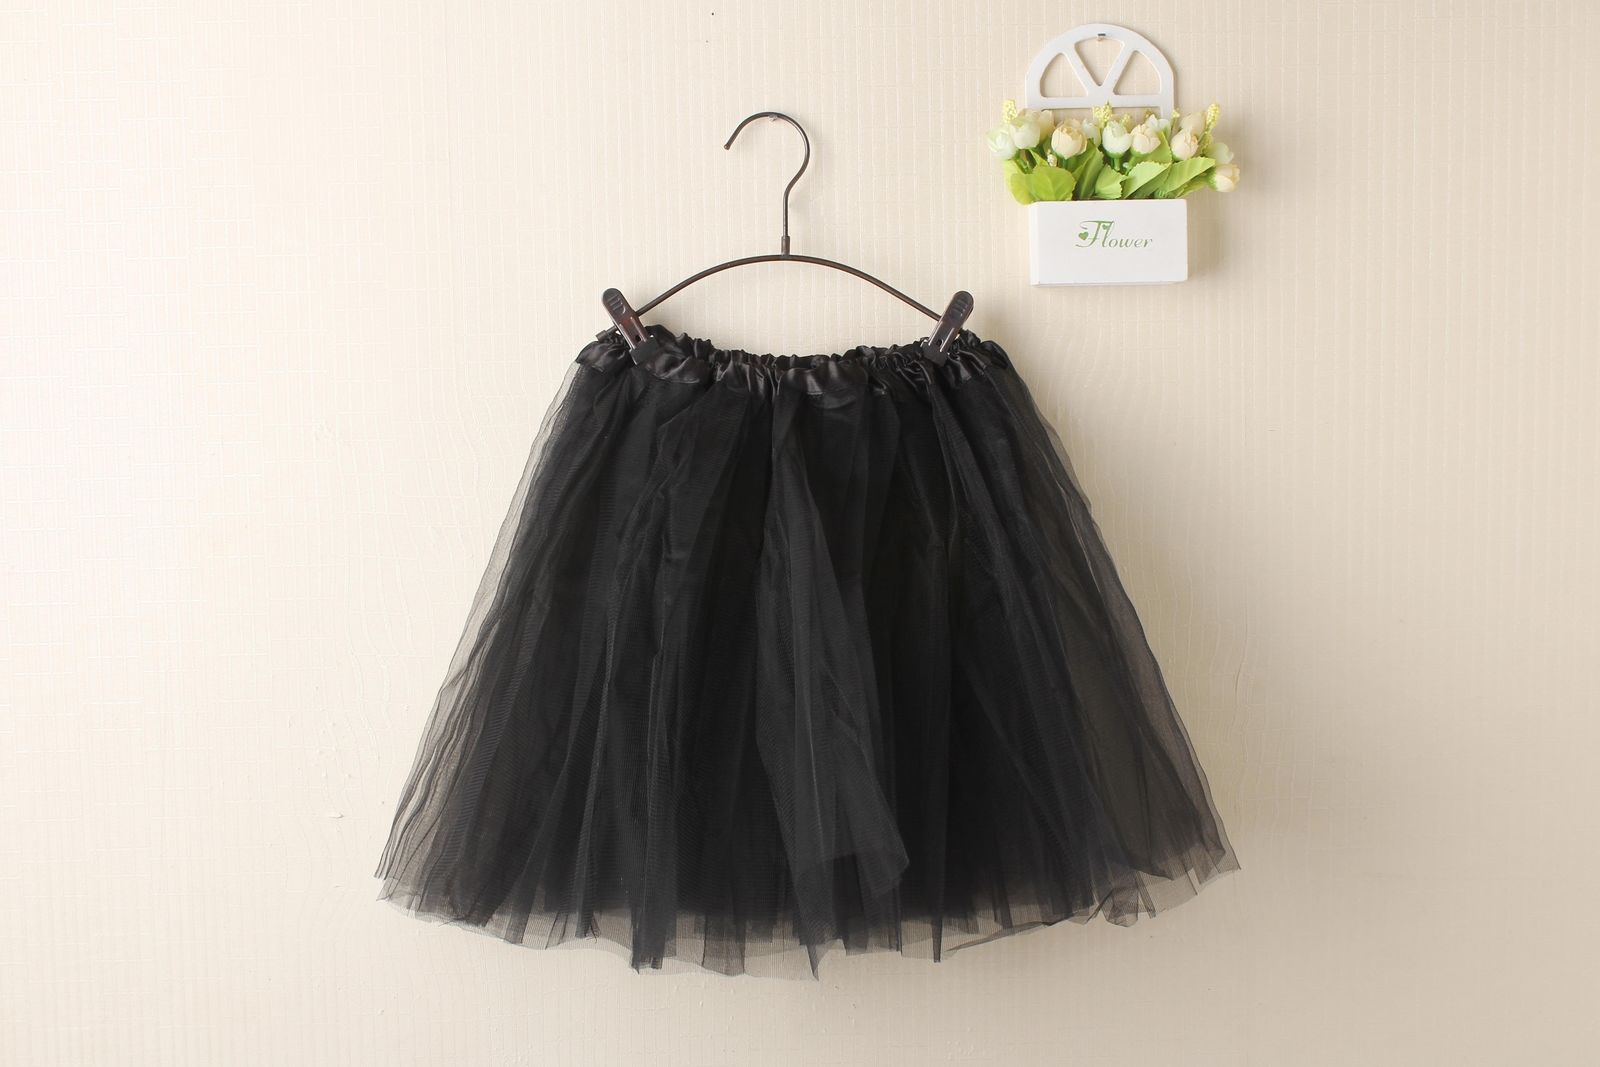 New Kids Tutu Skirt Baby Princess Dressup Party Girls Costume Ballet Dance Wear, Black, Kids